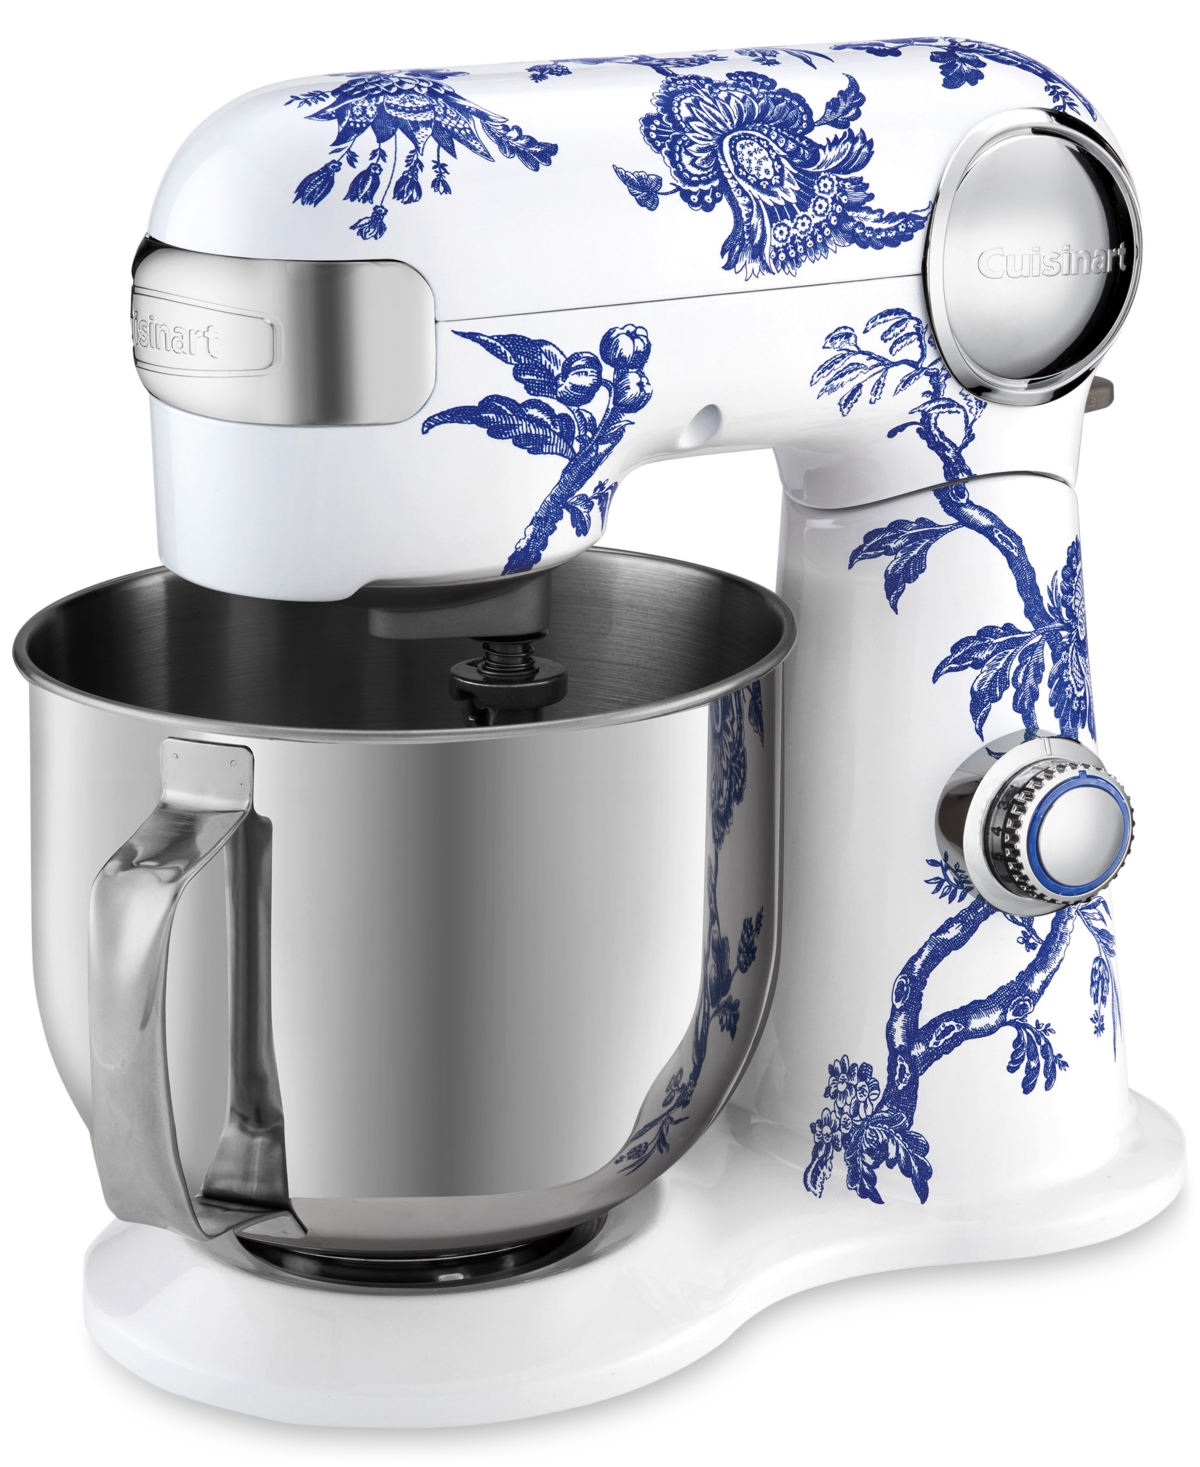 Cuisinart Caskata Precision Master 5.5-qt. Stand Mixer In White And Blue Floral